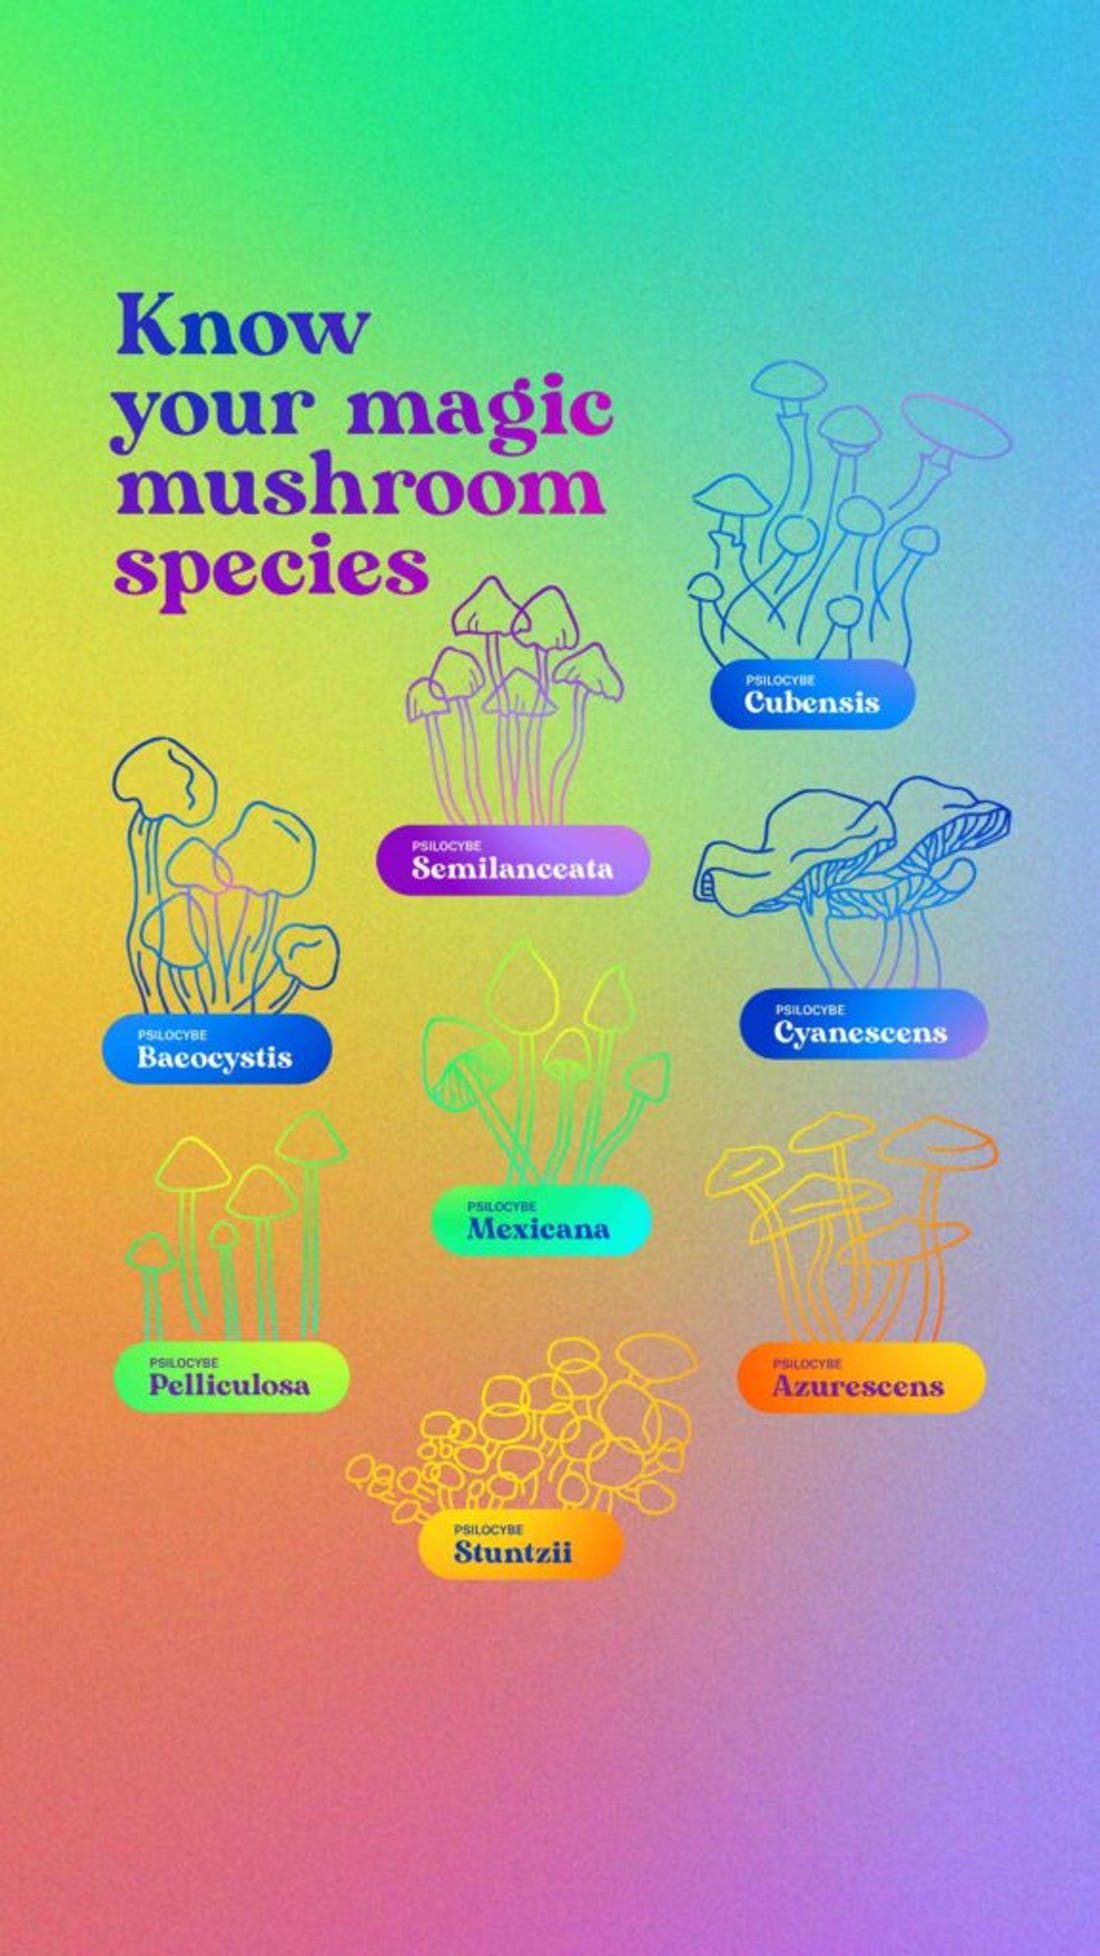 Do magic mushrooms have 'strains' like cannabis?